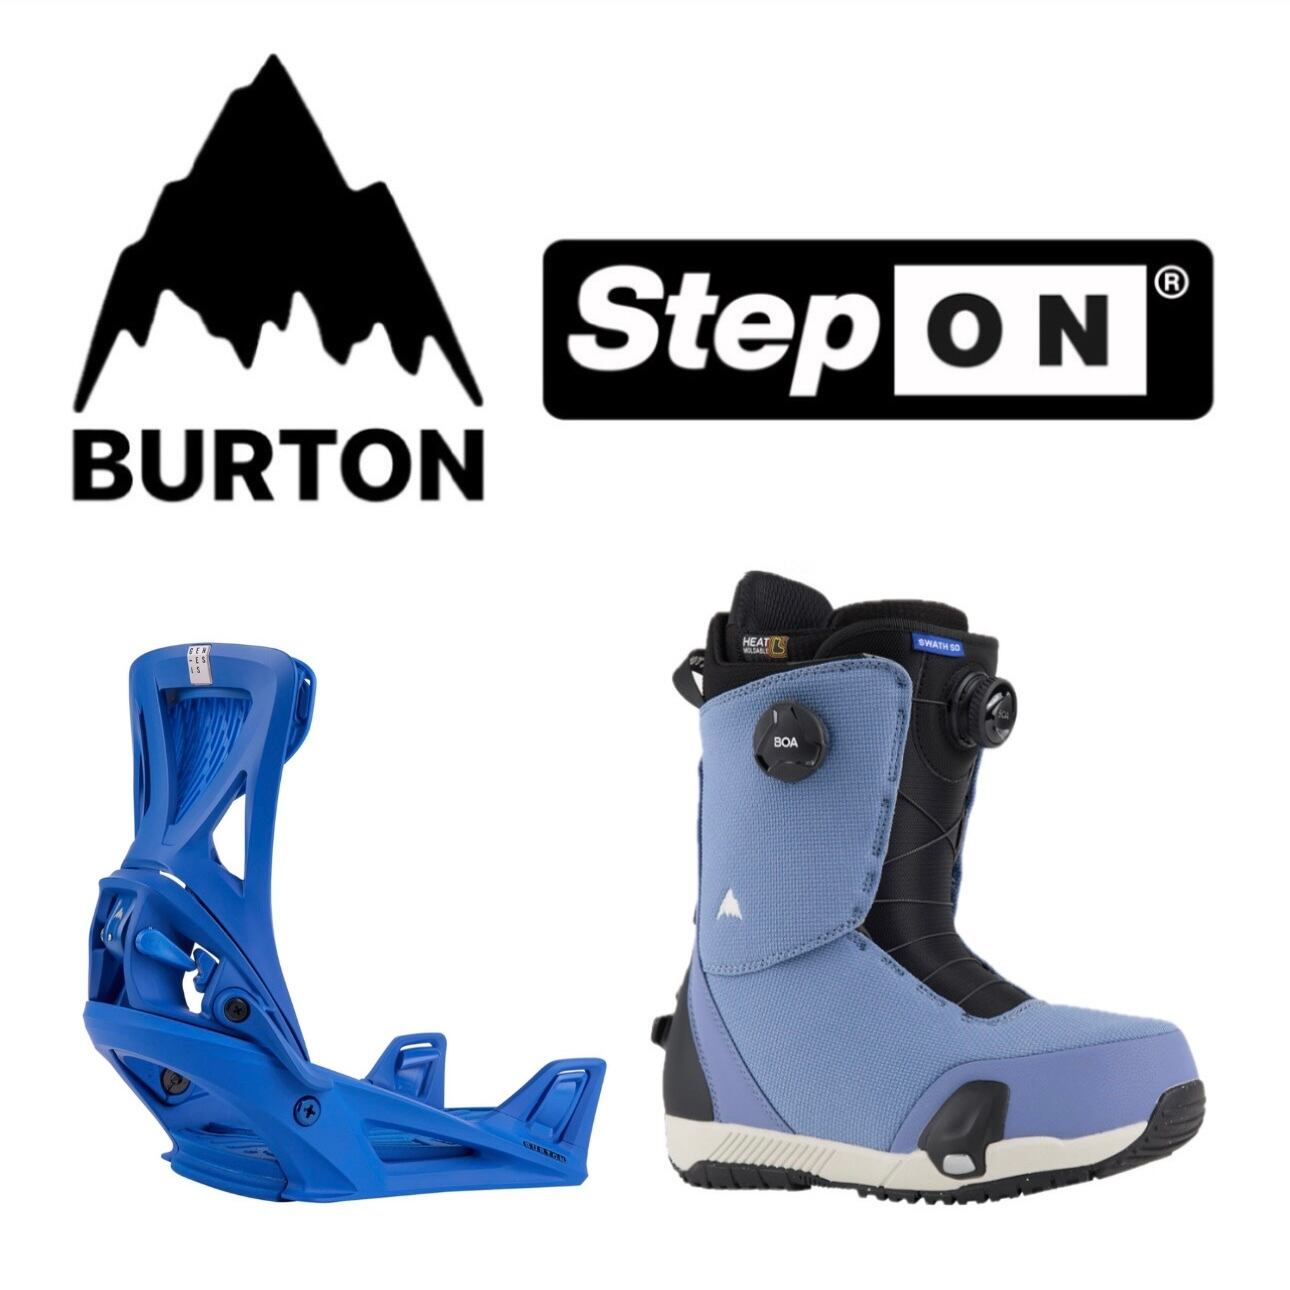 Burton バートン Step On ステップオン Genesis ジェネシス Swath スワス Snowboard スノーボード バインディング  ブーツ ビンディング カービング パウダー グラトリ ラントリ バックカントリー フリーラン オールマウンテン オールラウンド メンズ レディース